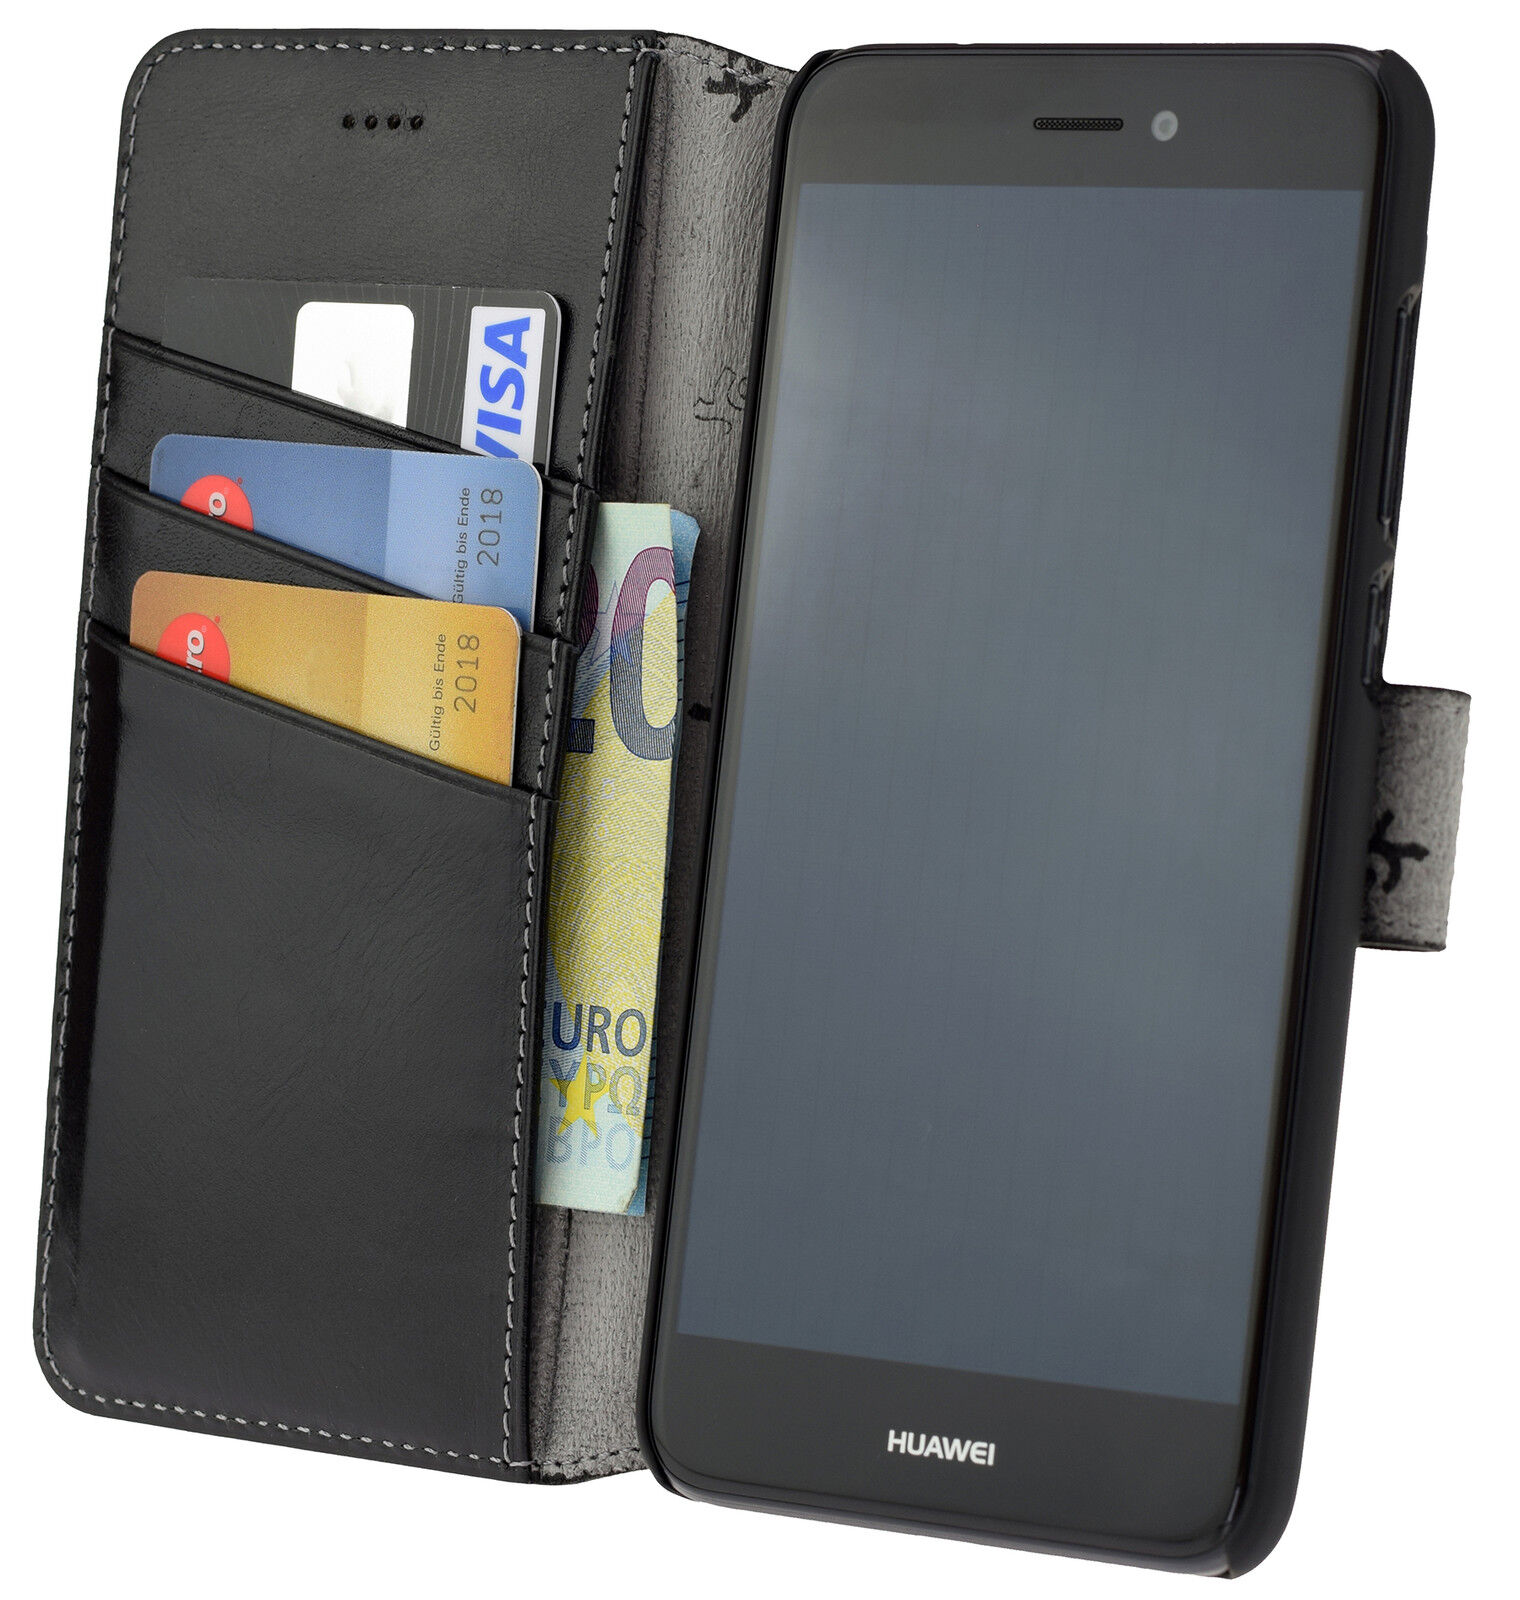 pistool Raad eens koppel Flip Case Wallet Leather Case Book Case IN Black Huawei P8 Lite (2017)  4251294947465 | eBay